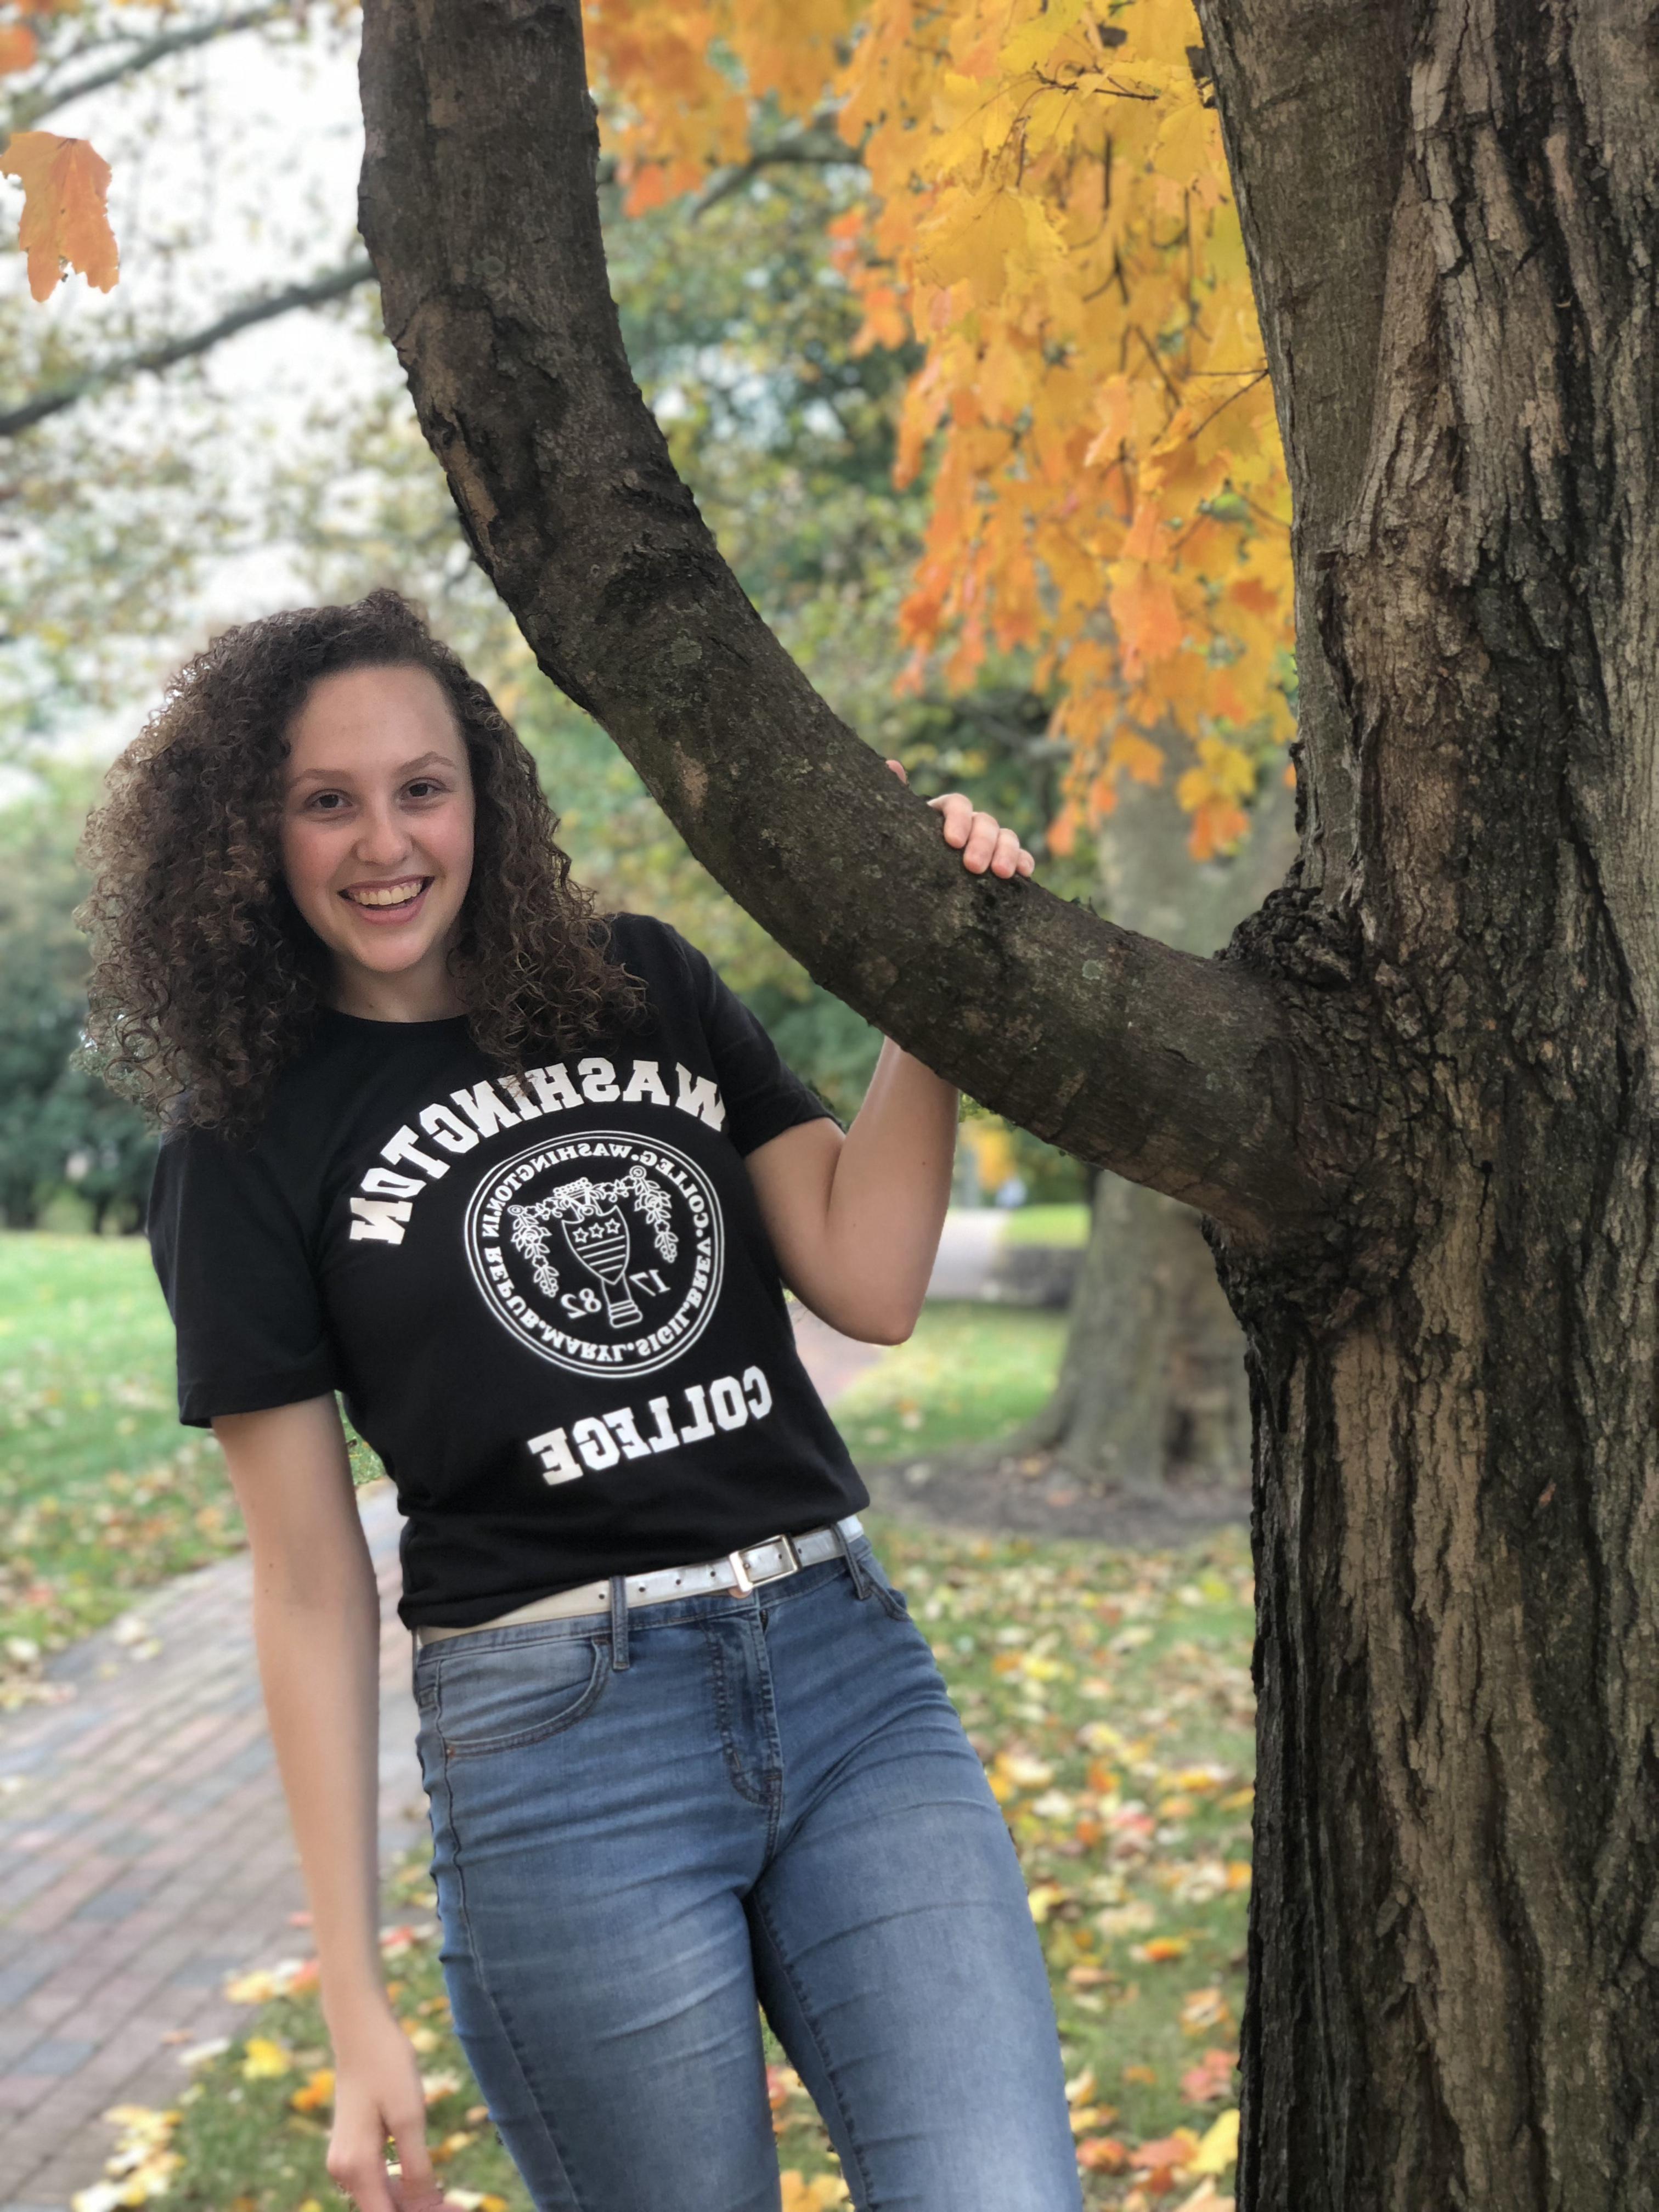 Carlee, 面带微笑，穿着印有九州娱乐官网标志的黑色t恤, 蓝色牛仔裤, 和 a white belt in front of fall foliage. 